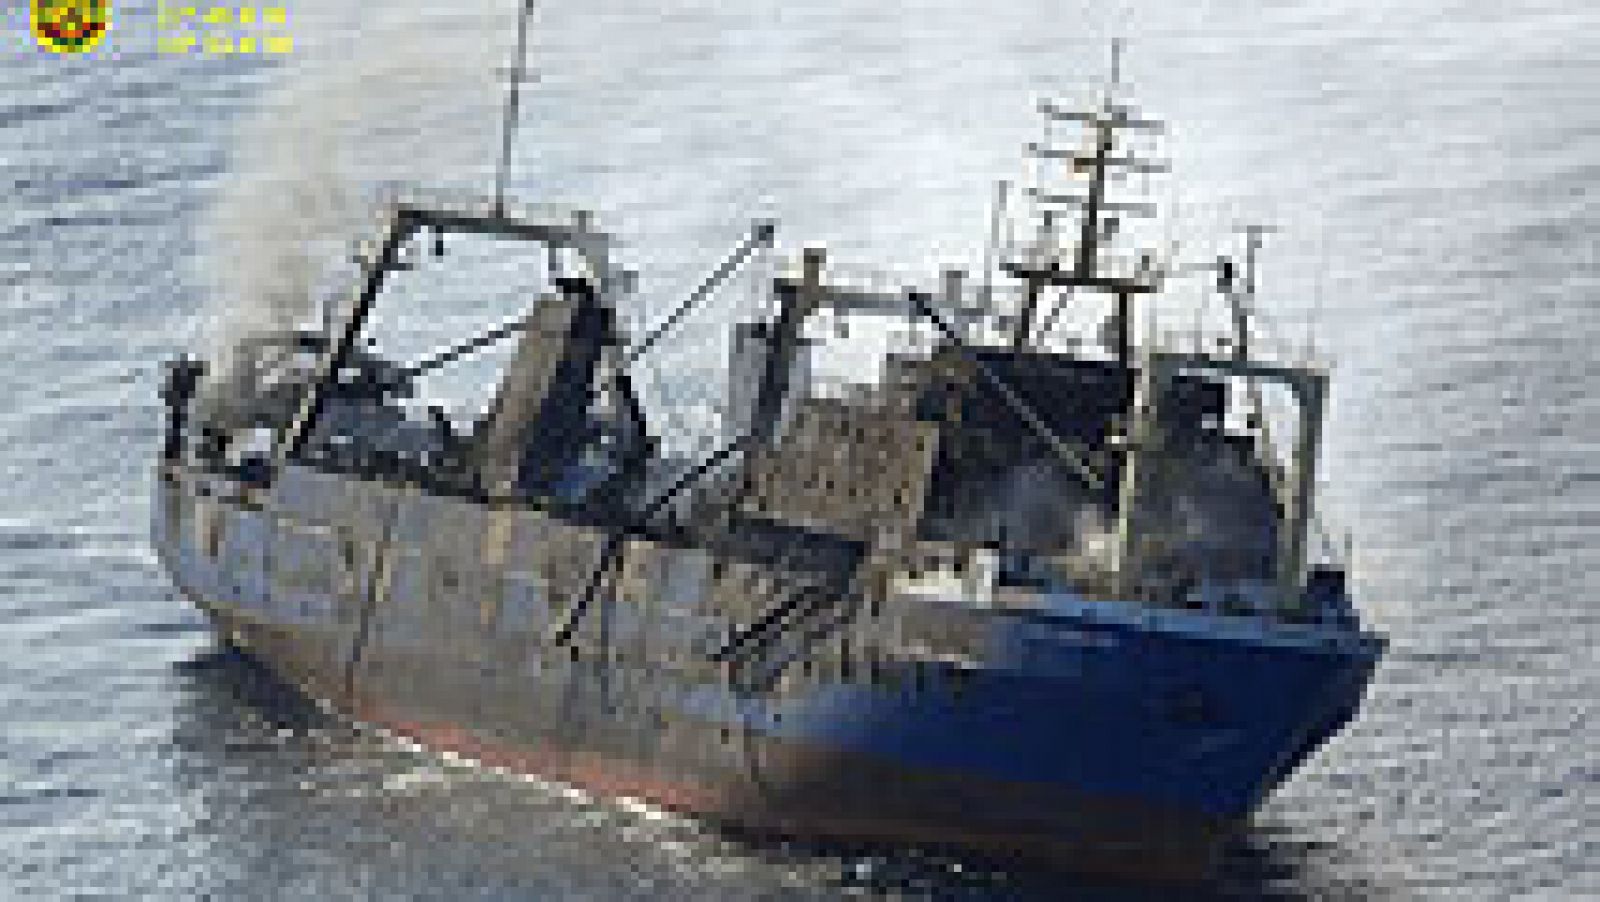 Telediario 1: Se eleva la alerta por el hundimiento barco ruso | RTVE Play